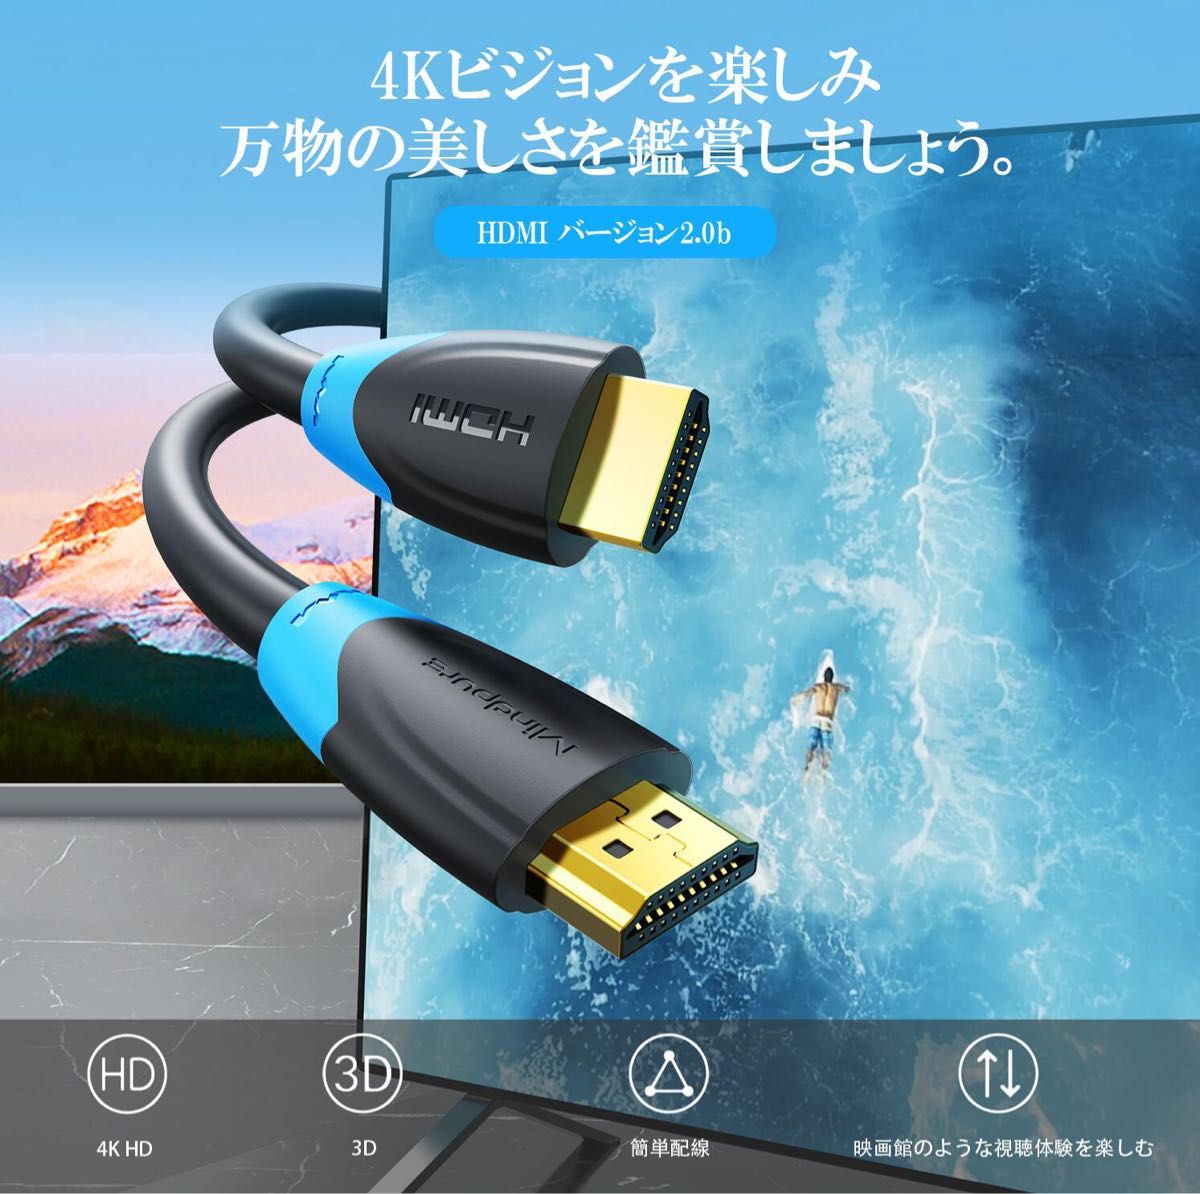 HDMIケーブル 4K 1m 2.0規格 ハイスピード HDMI ケーブル